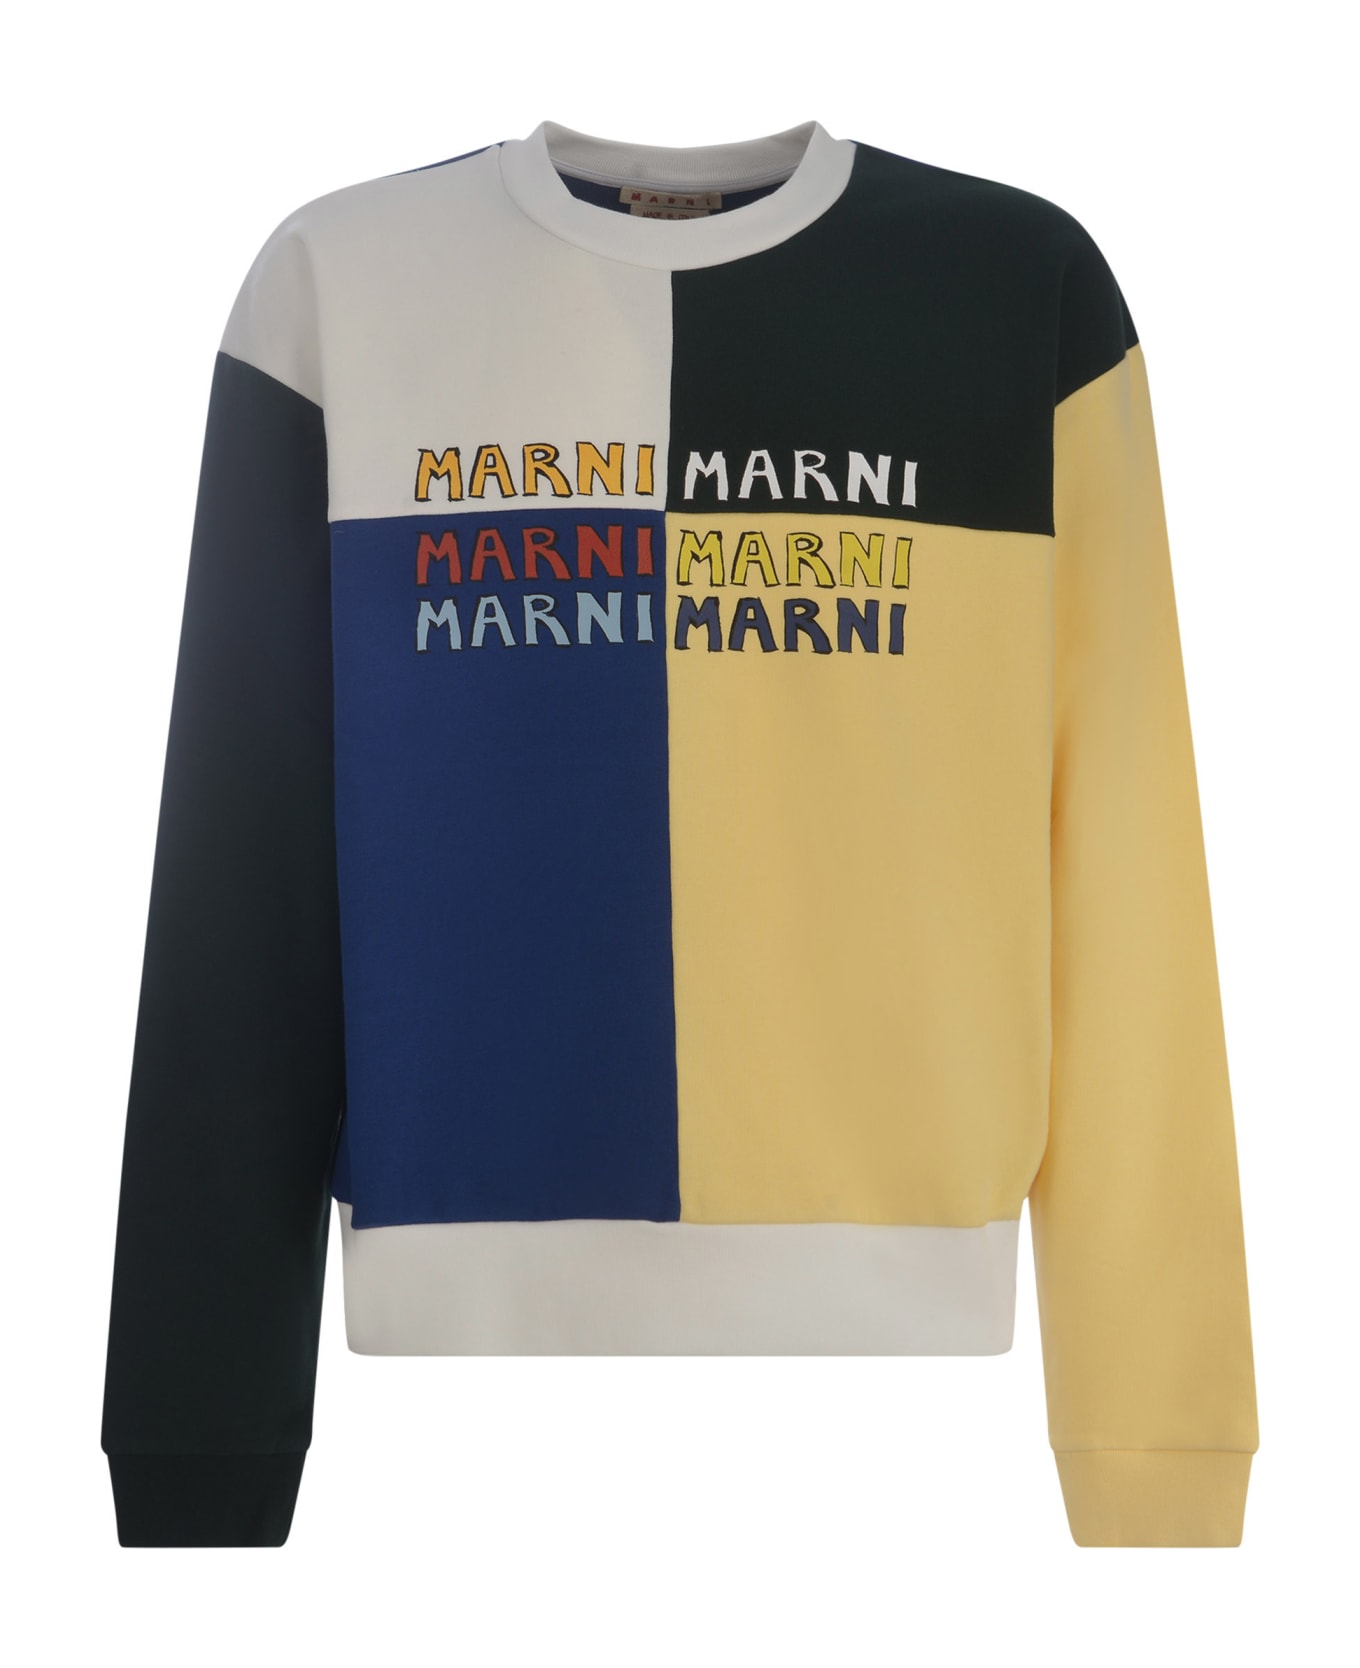 Marni Sweatshirt Marni Made Of Cotton - Crema